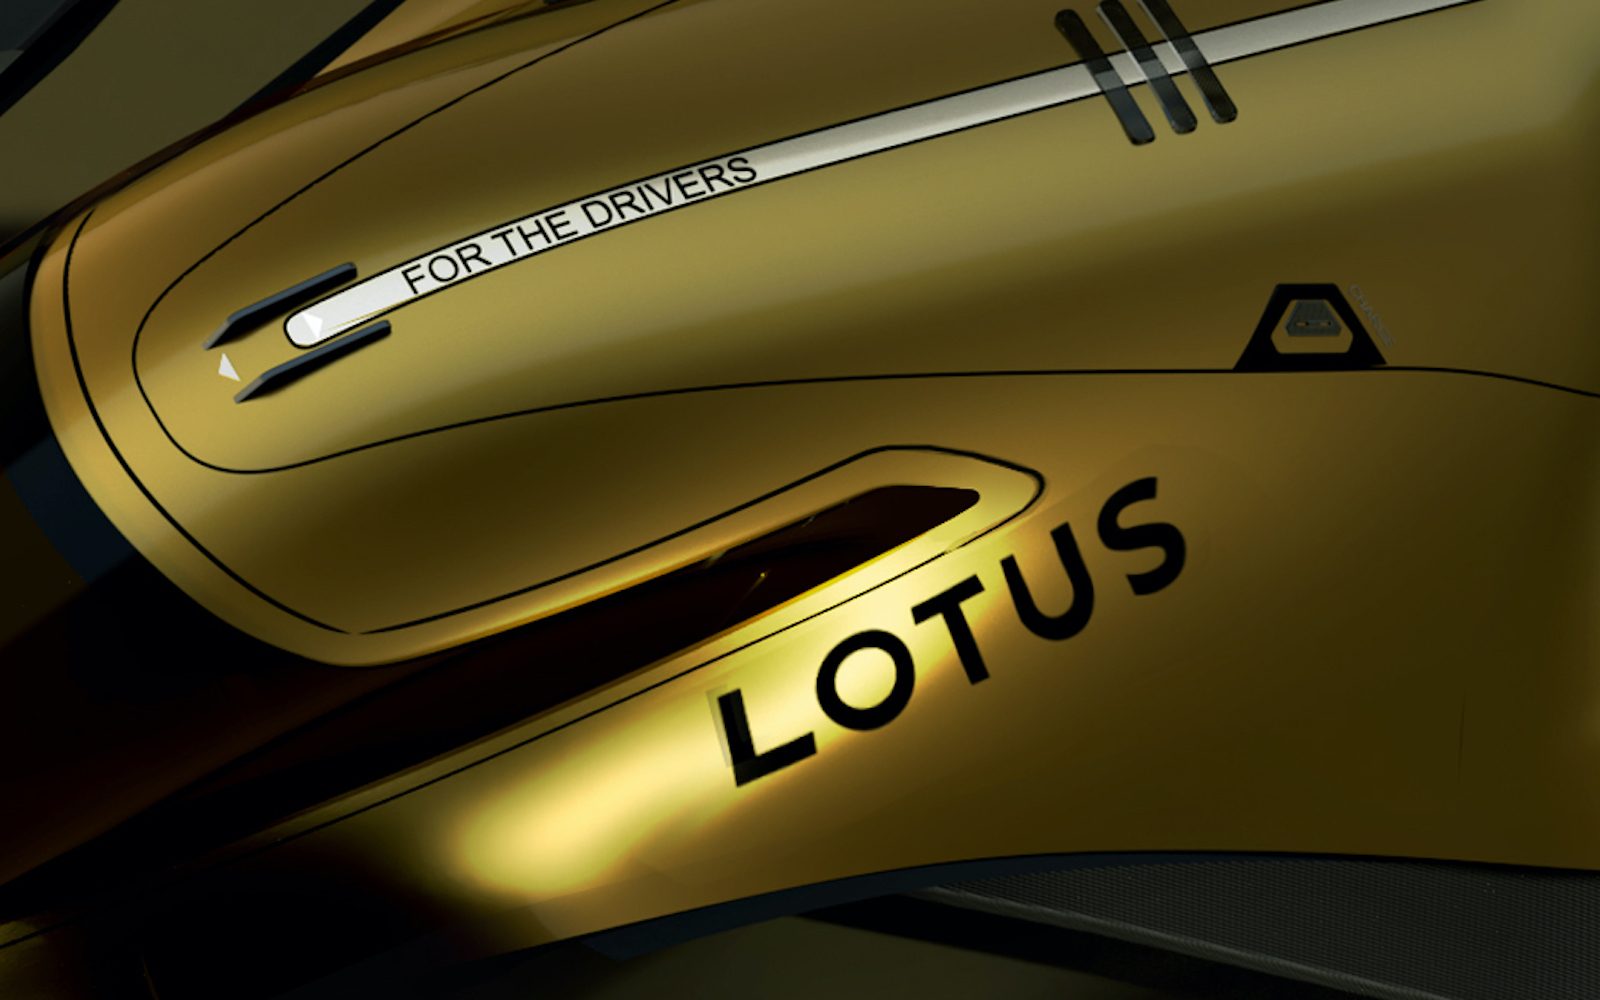 Lotus E-9R